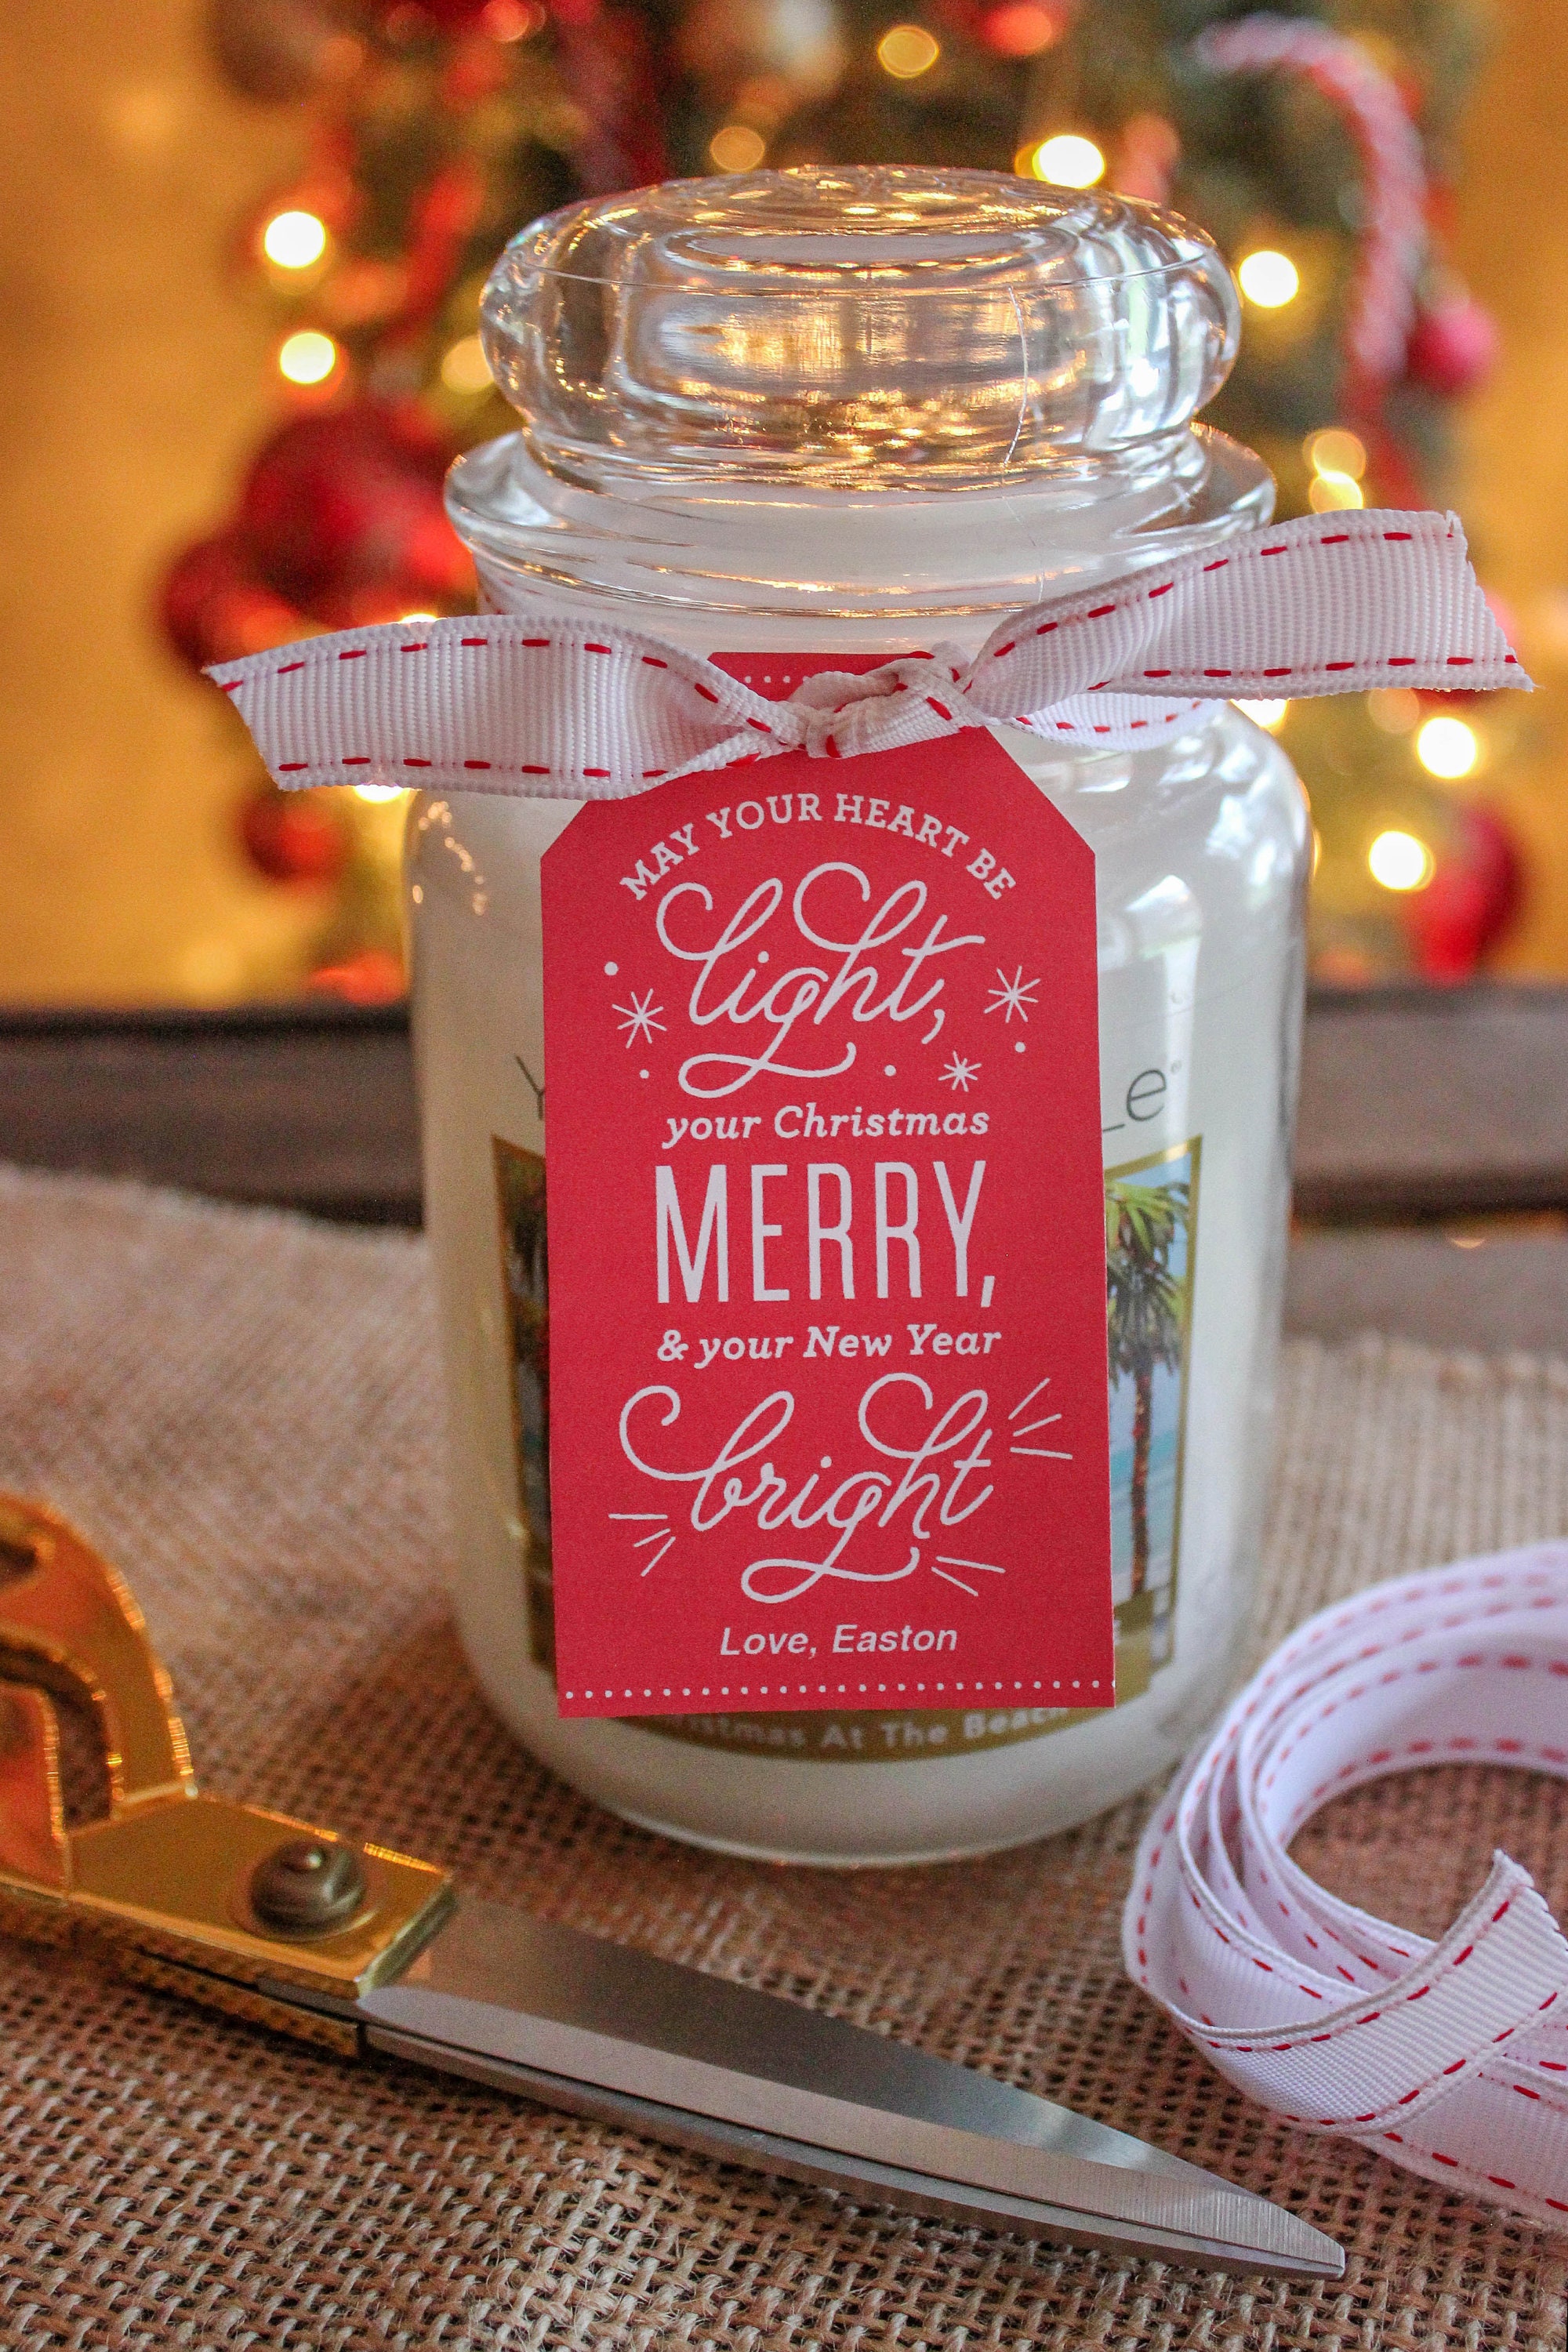 Many merry neighbor Christmas gift ideas - Deseret News